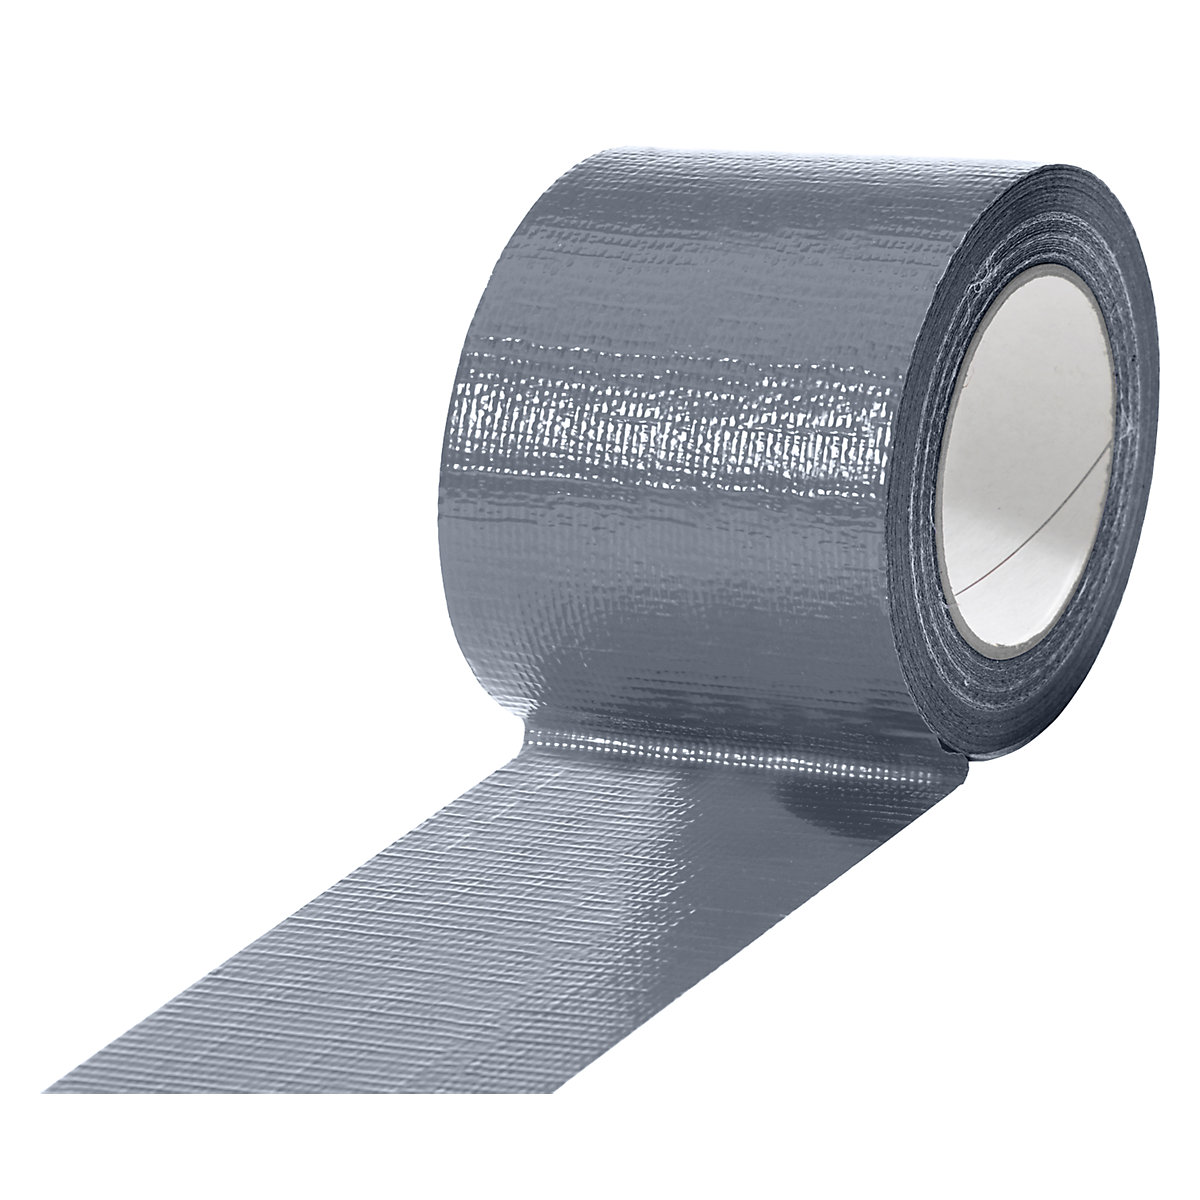 Tkaninová páska, v různých barvách, bal.j. 12 rolí, stříbrná, šířka pásky 75 mm-6